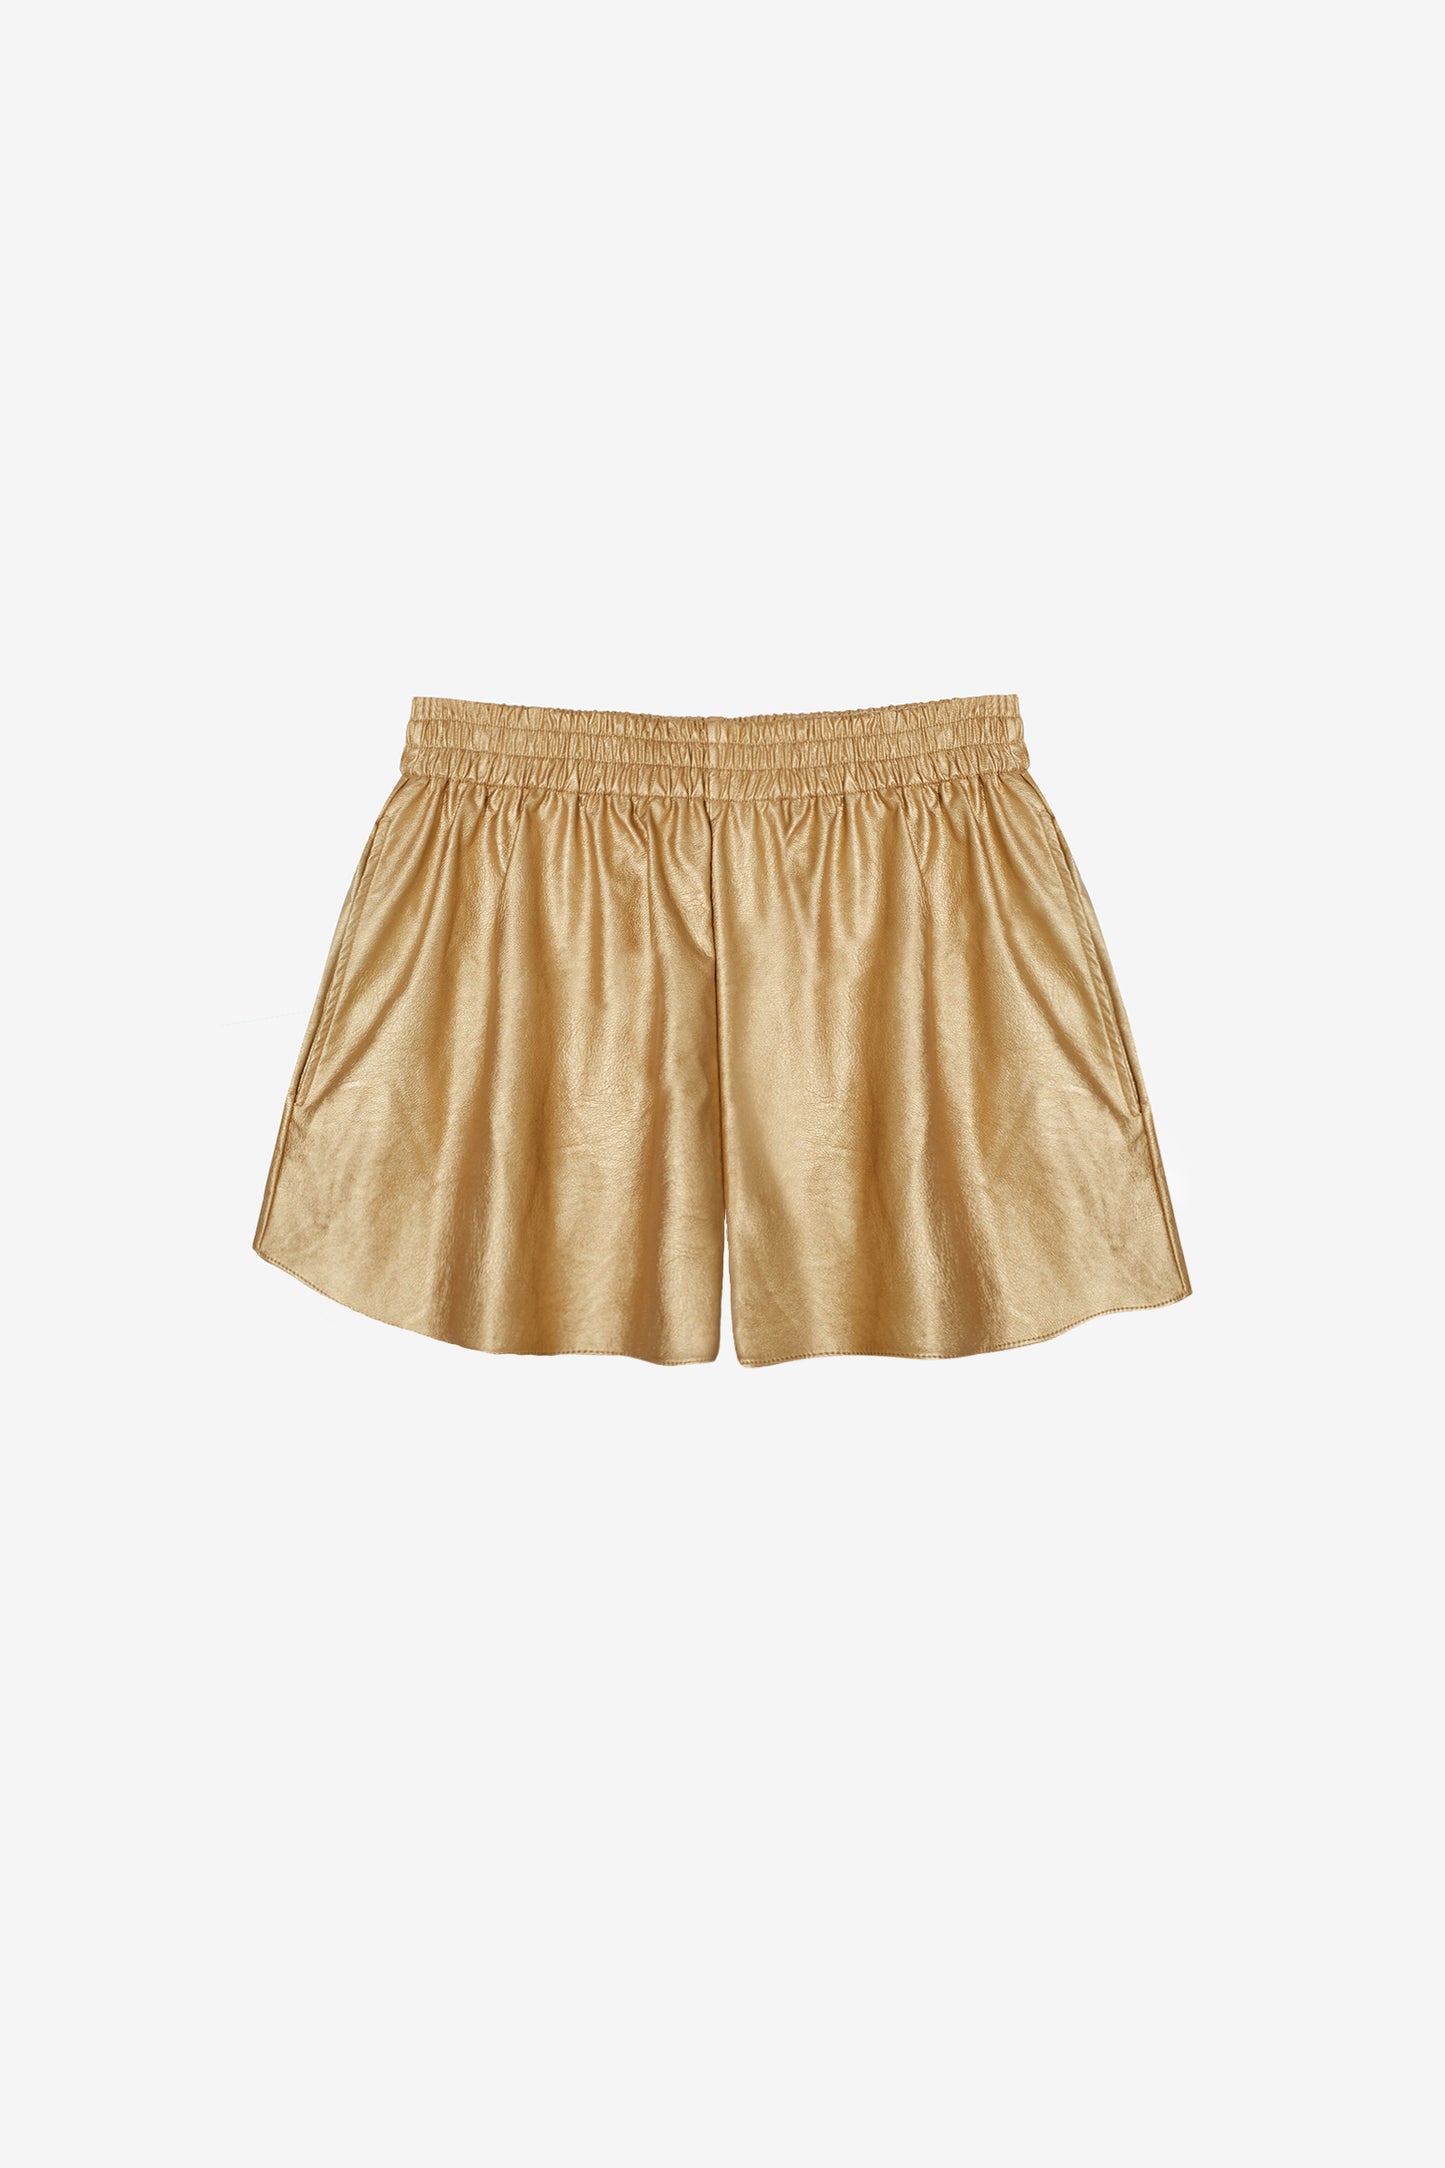 DIAMANTE - Eccentric faux leather shorts